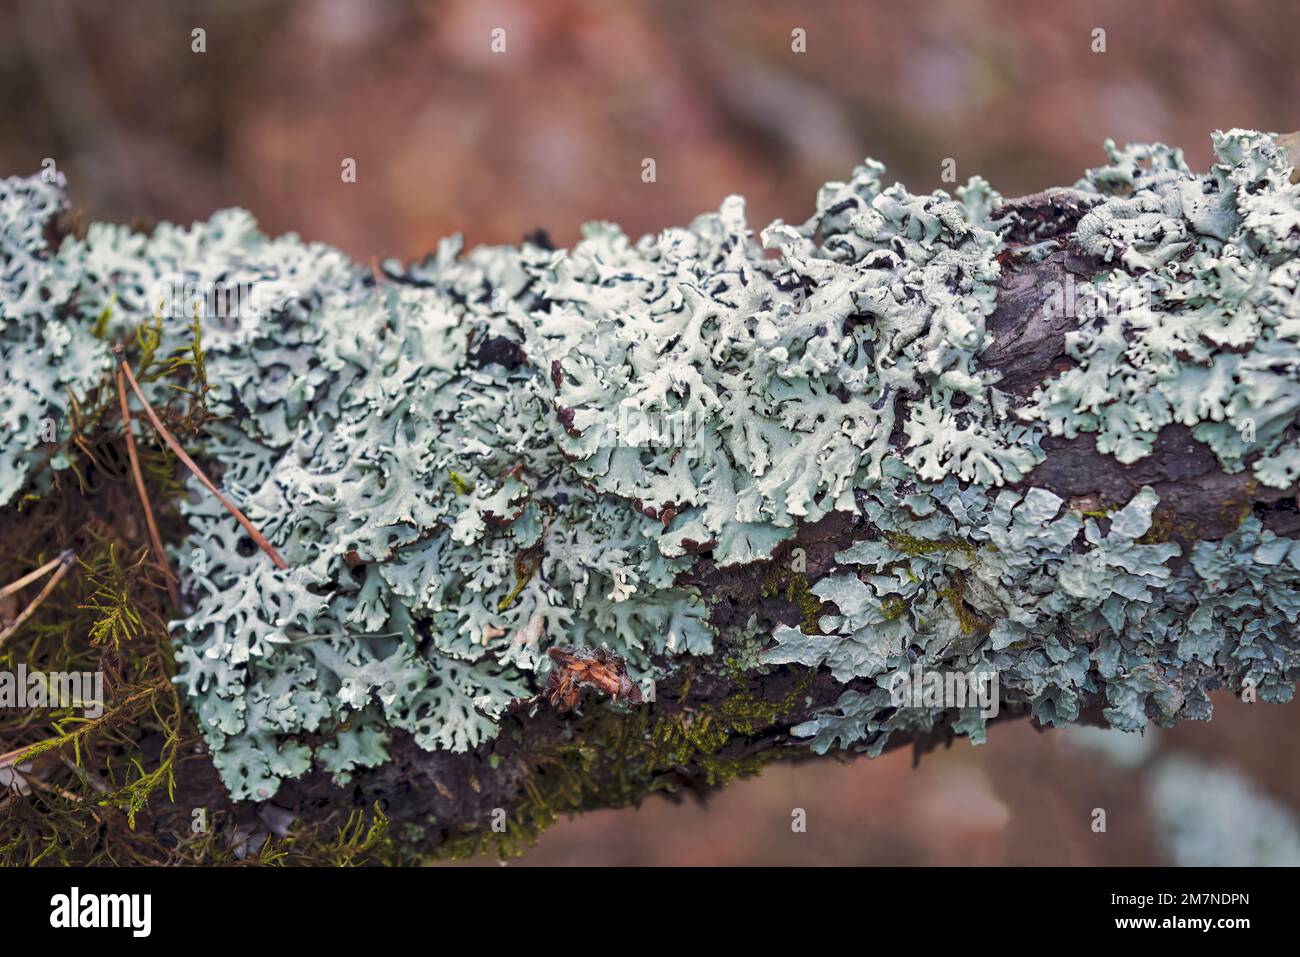 Parmelia sulcata lat. Parmelia sulcata - type of lichen genus Parmelee Parmelia family Parmeliaceae Parmeliaceae. Lichen Parmelia sulcata and bright g Stock Photo